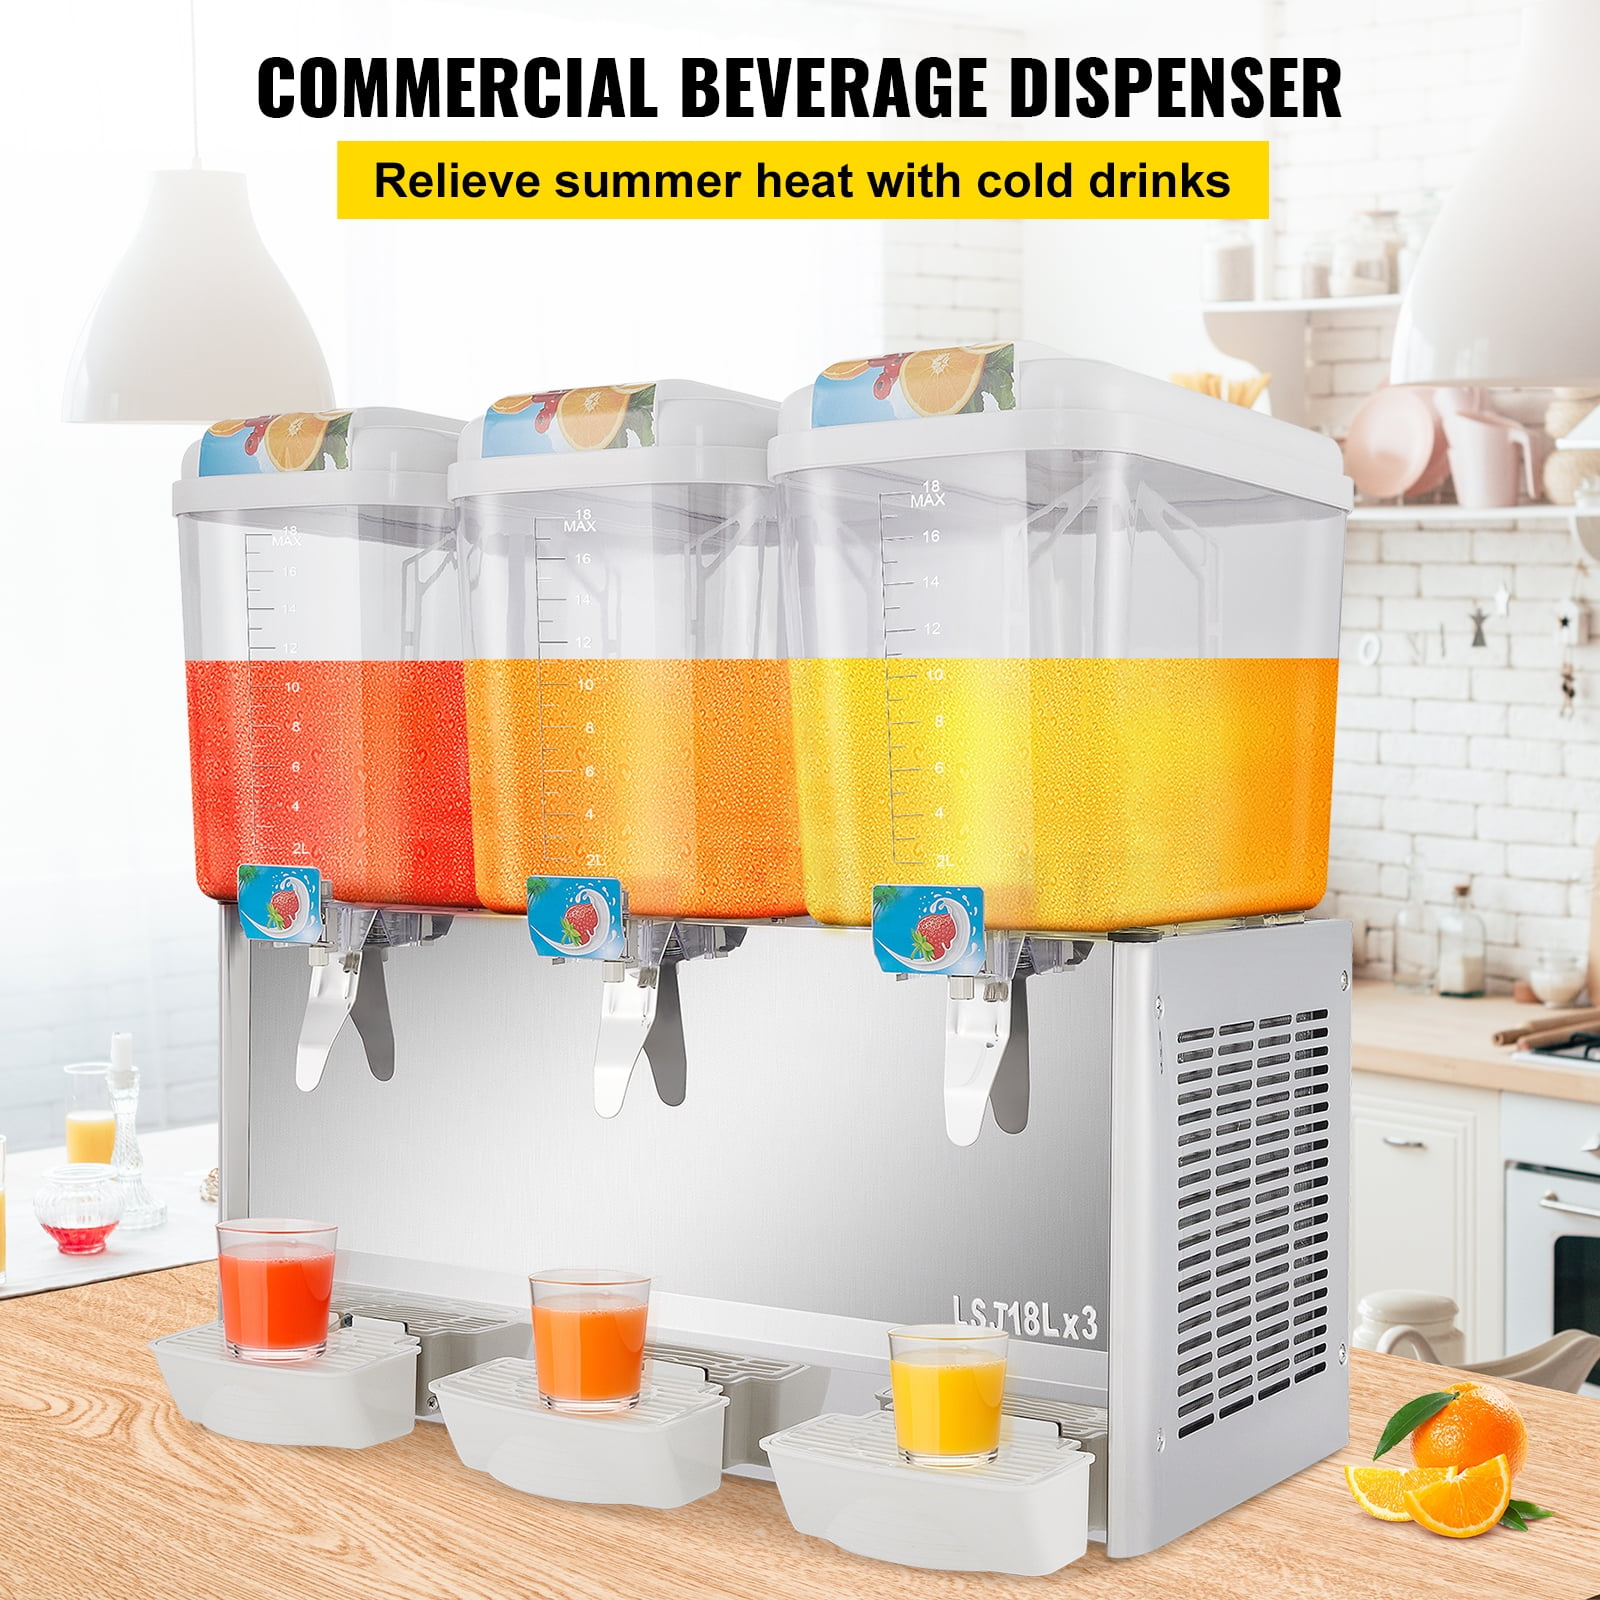 VEVOR Commercial Beverage Dispenser, 4.8 Gal,18L Single Tank Ice Tea Drink Machine, 325W 304 Stainless Steel Juice Dispenser with 41°F-53.6°F